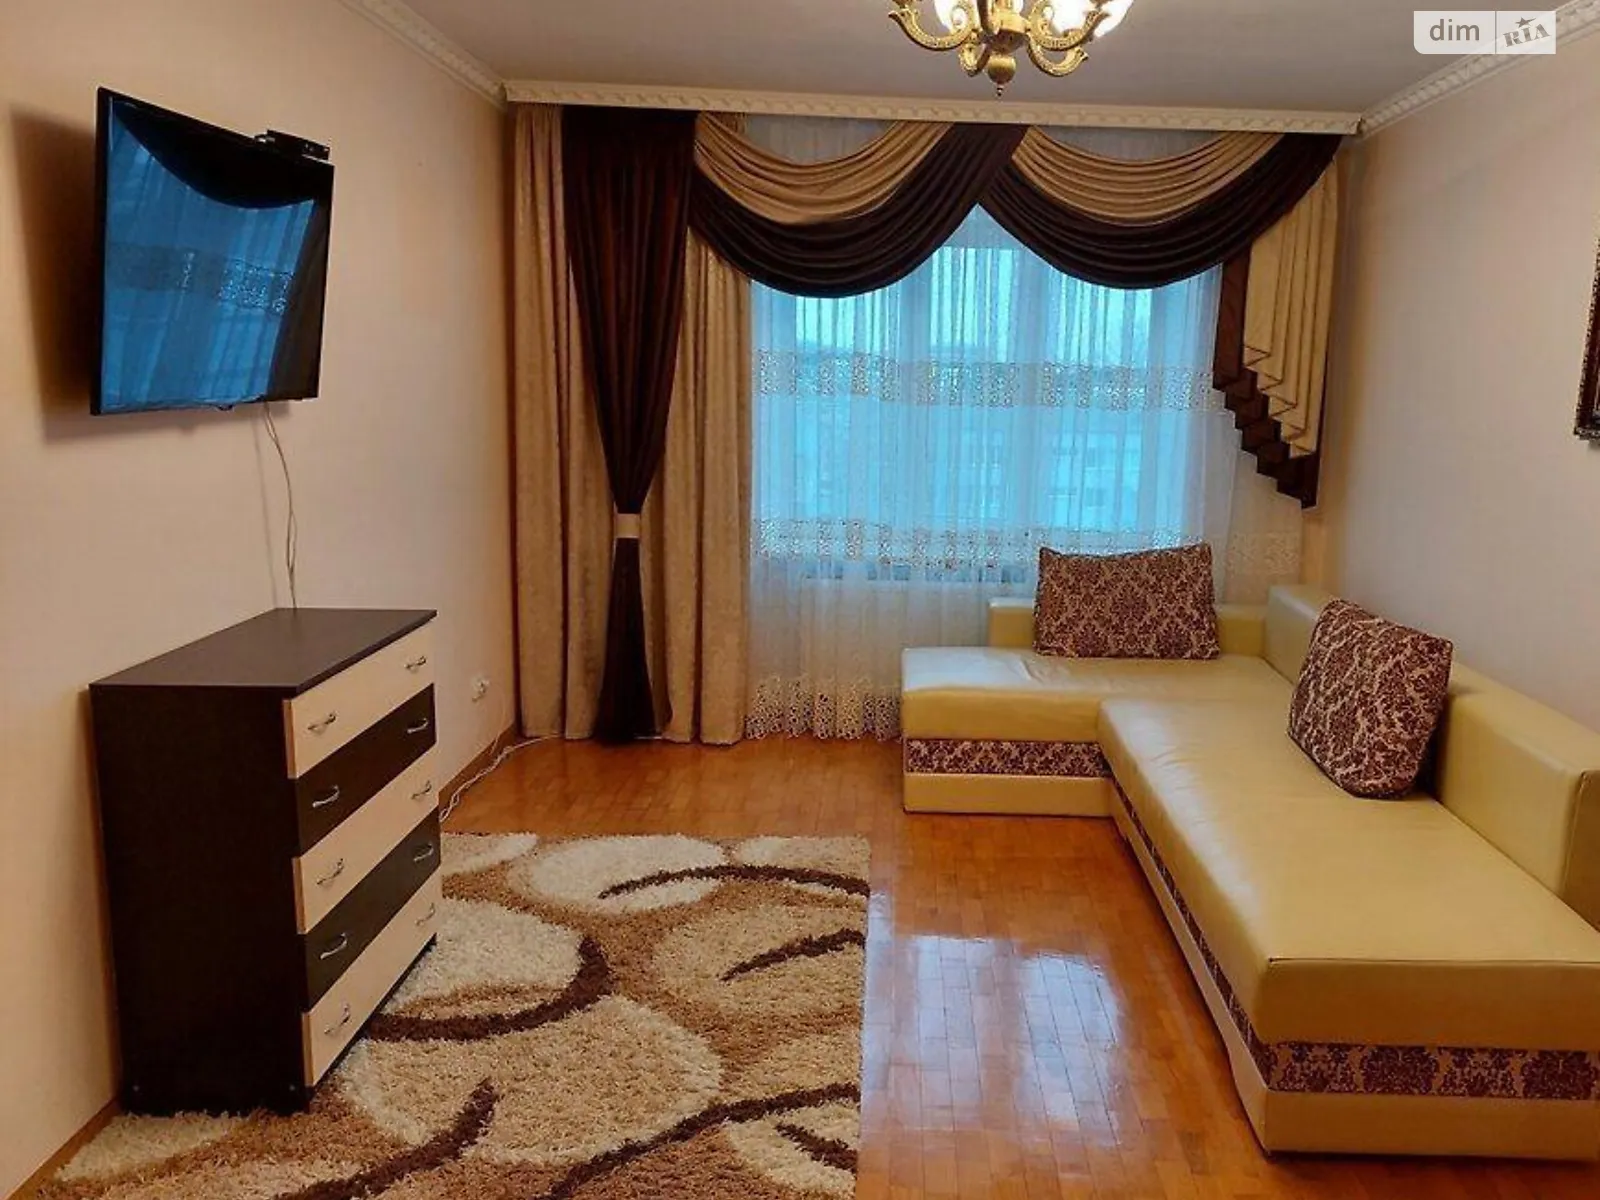 2-кімнатна квартира 55 кв. м у Тернополі, вул. Текстильна - фото 1